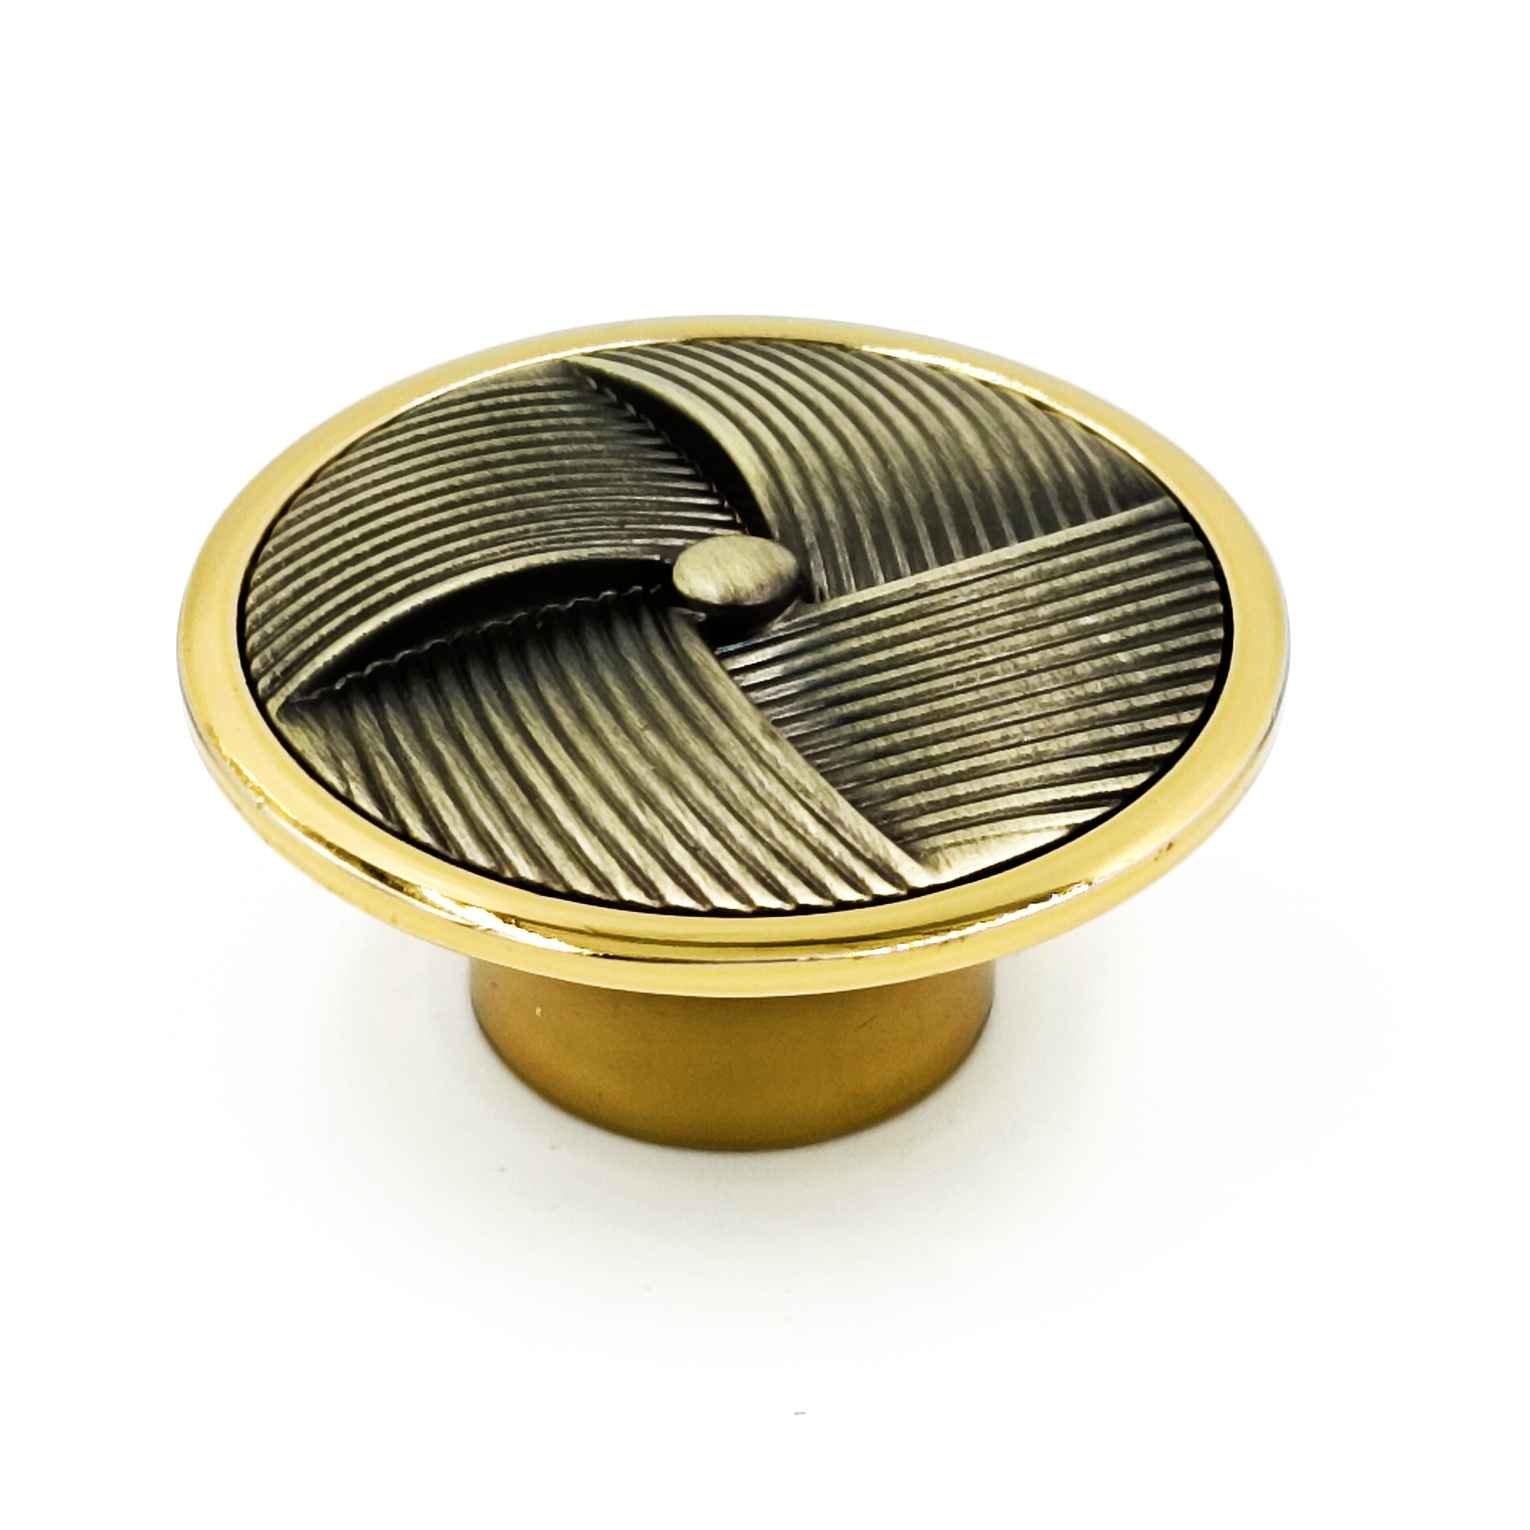 Fancy Drawer knob round 2 inch DK207 Antique/gold,Black,Gold/white finish  (1079) - Gold/white